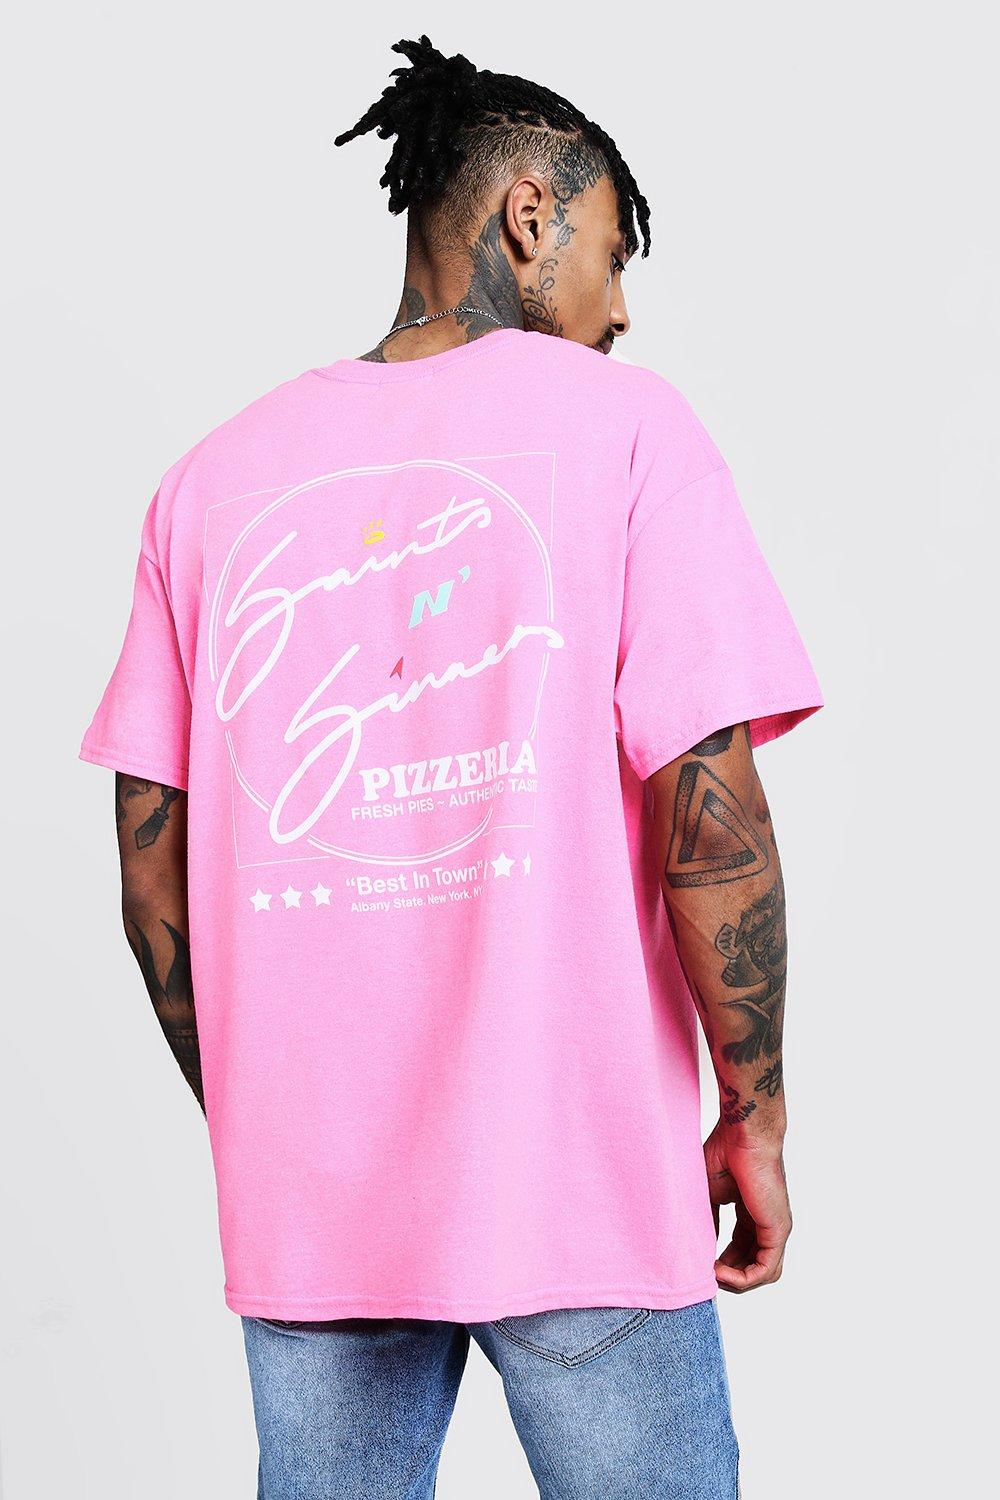 saints pink shirt